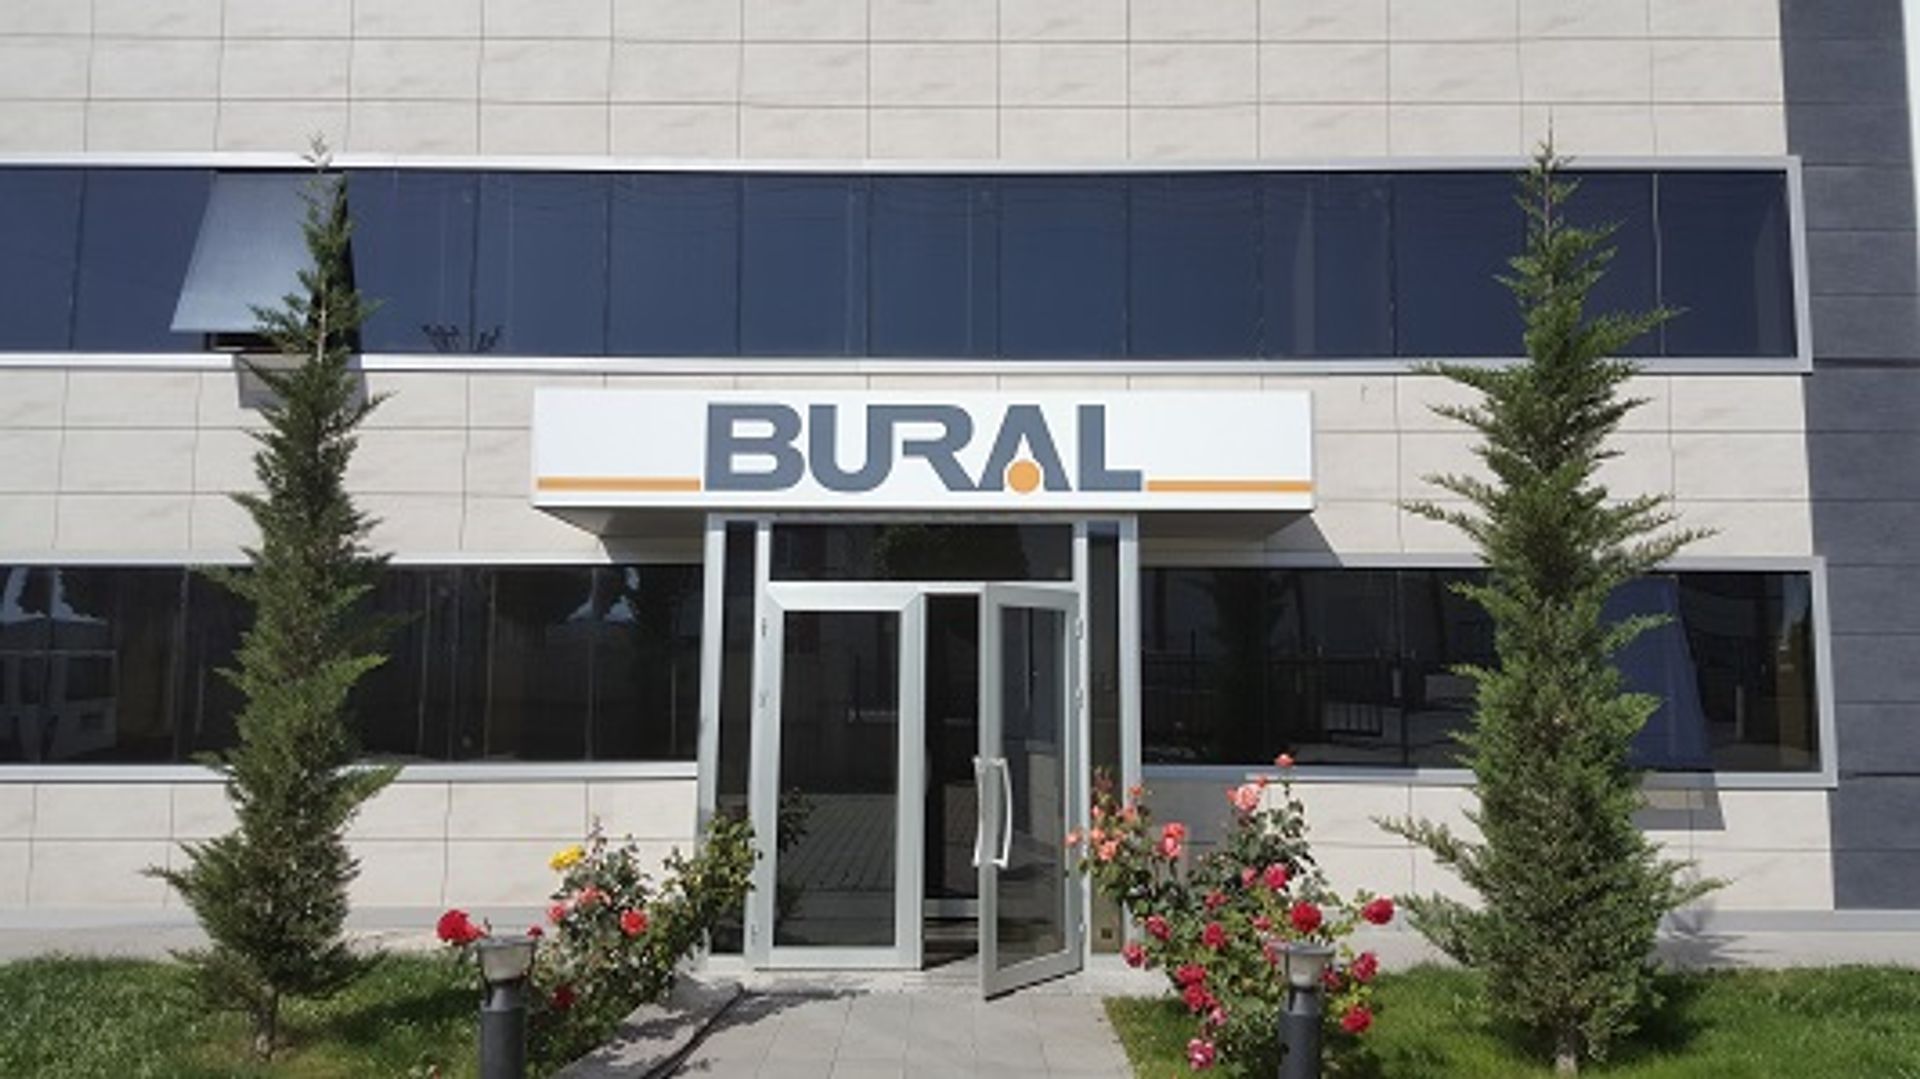 Bural Solar Ltd